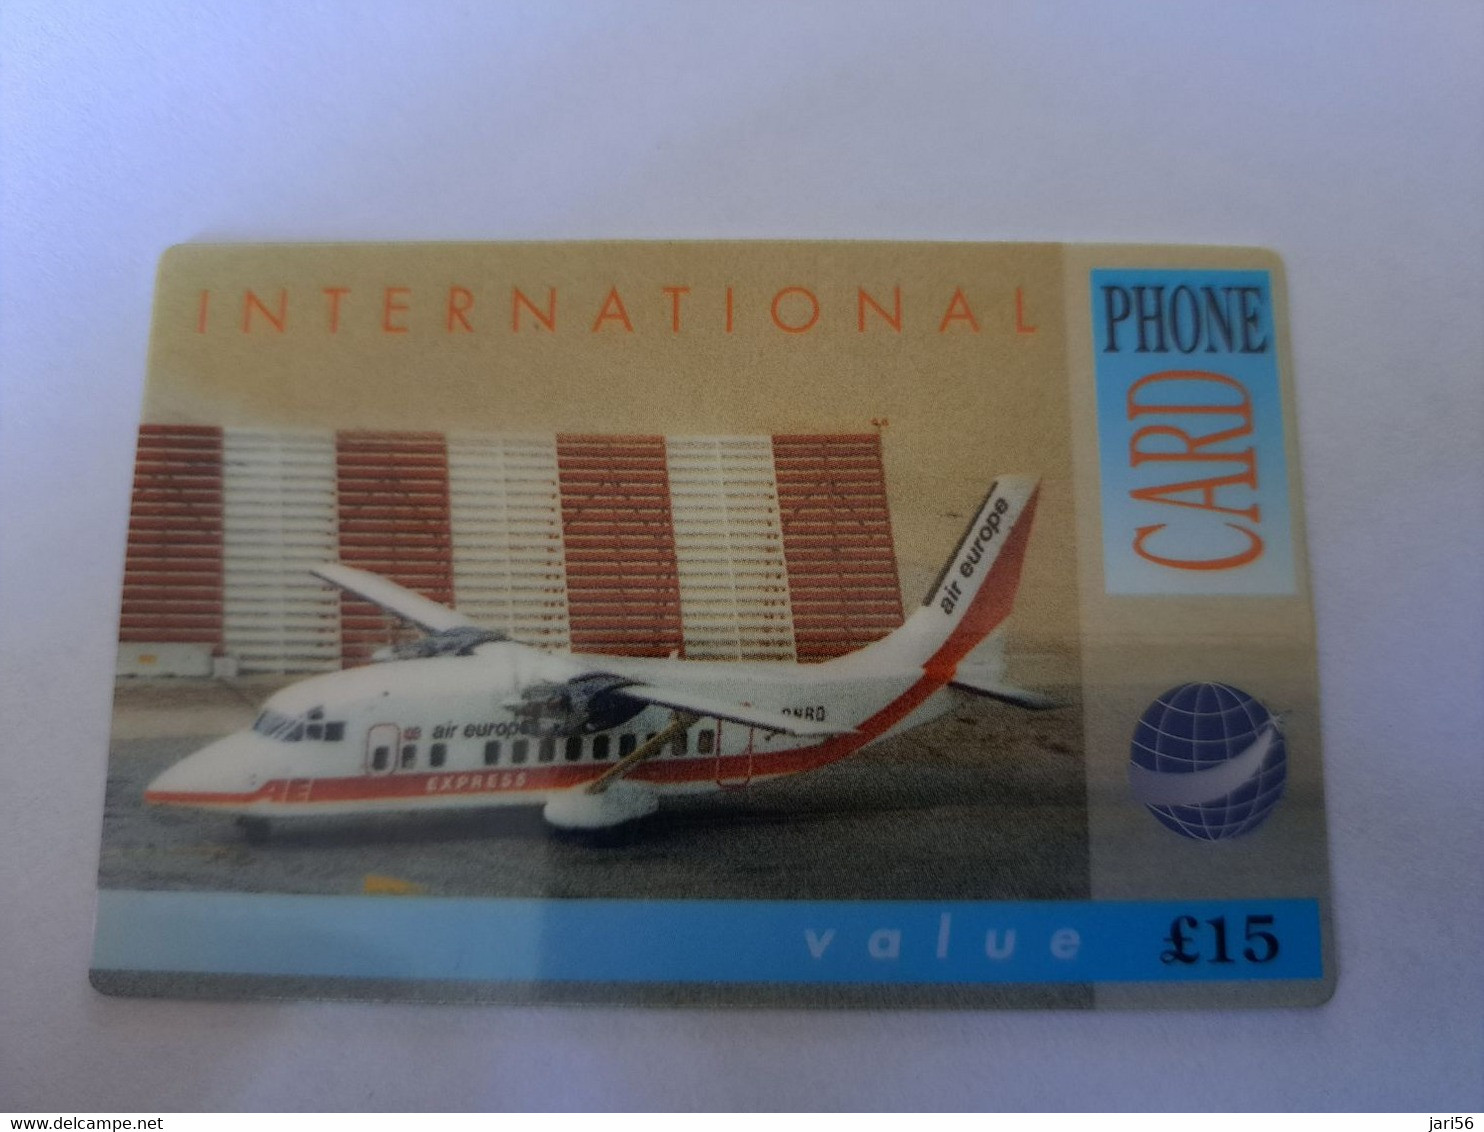 GREAT BRITAIN   15 POUND   / AEROPLANE  AIR EUROPE     DIT PHONECARD    PREPAID CARD      **12130** - [10] Colecciones